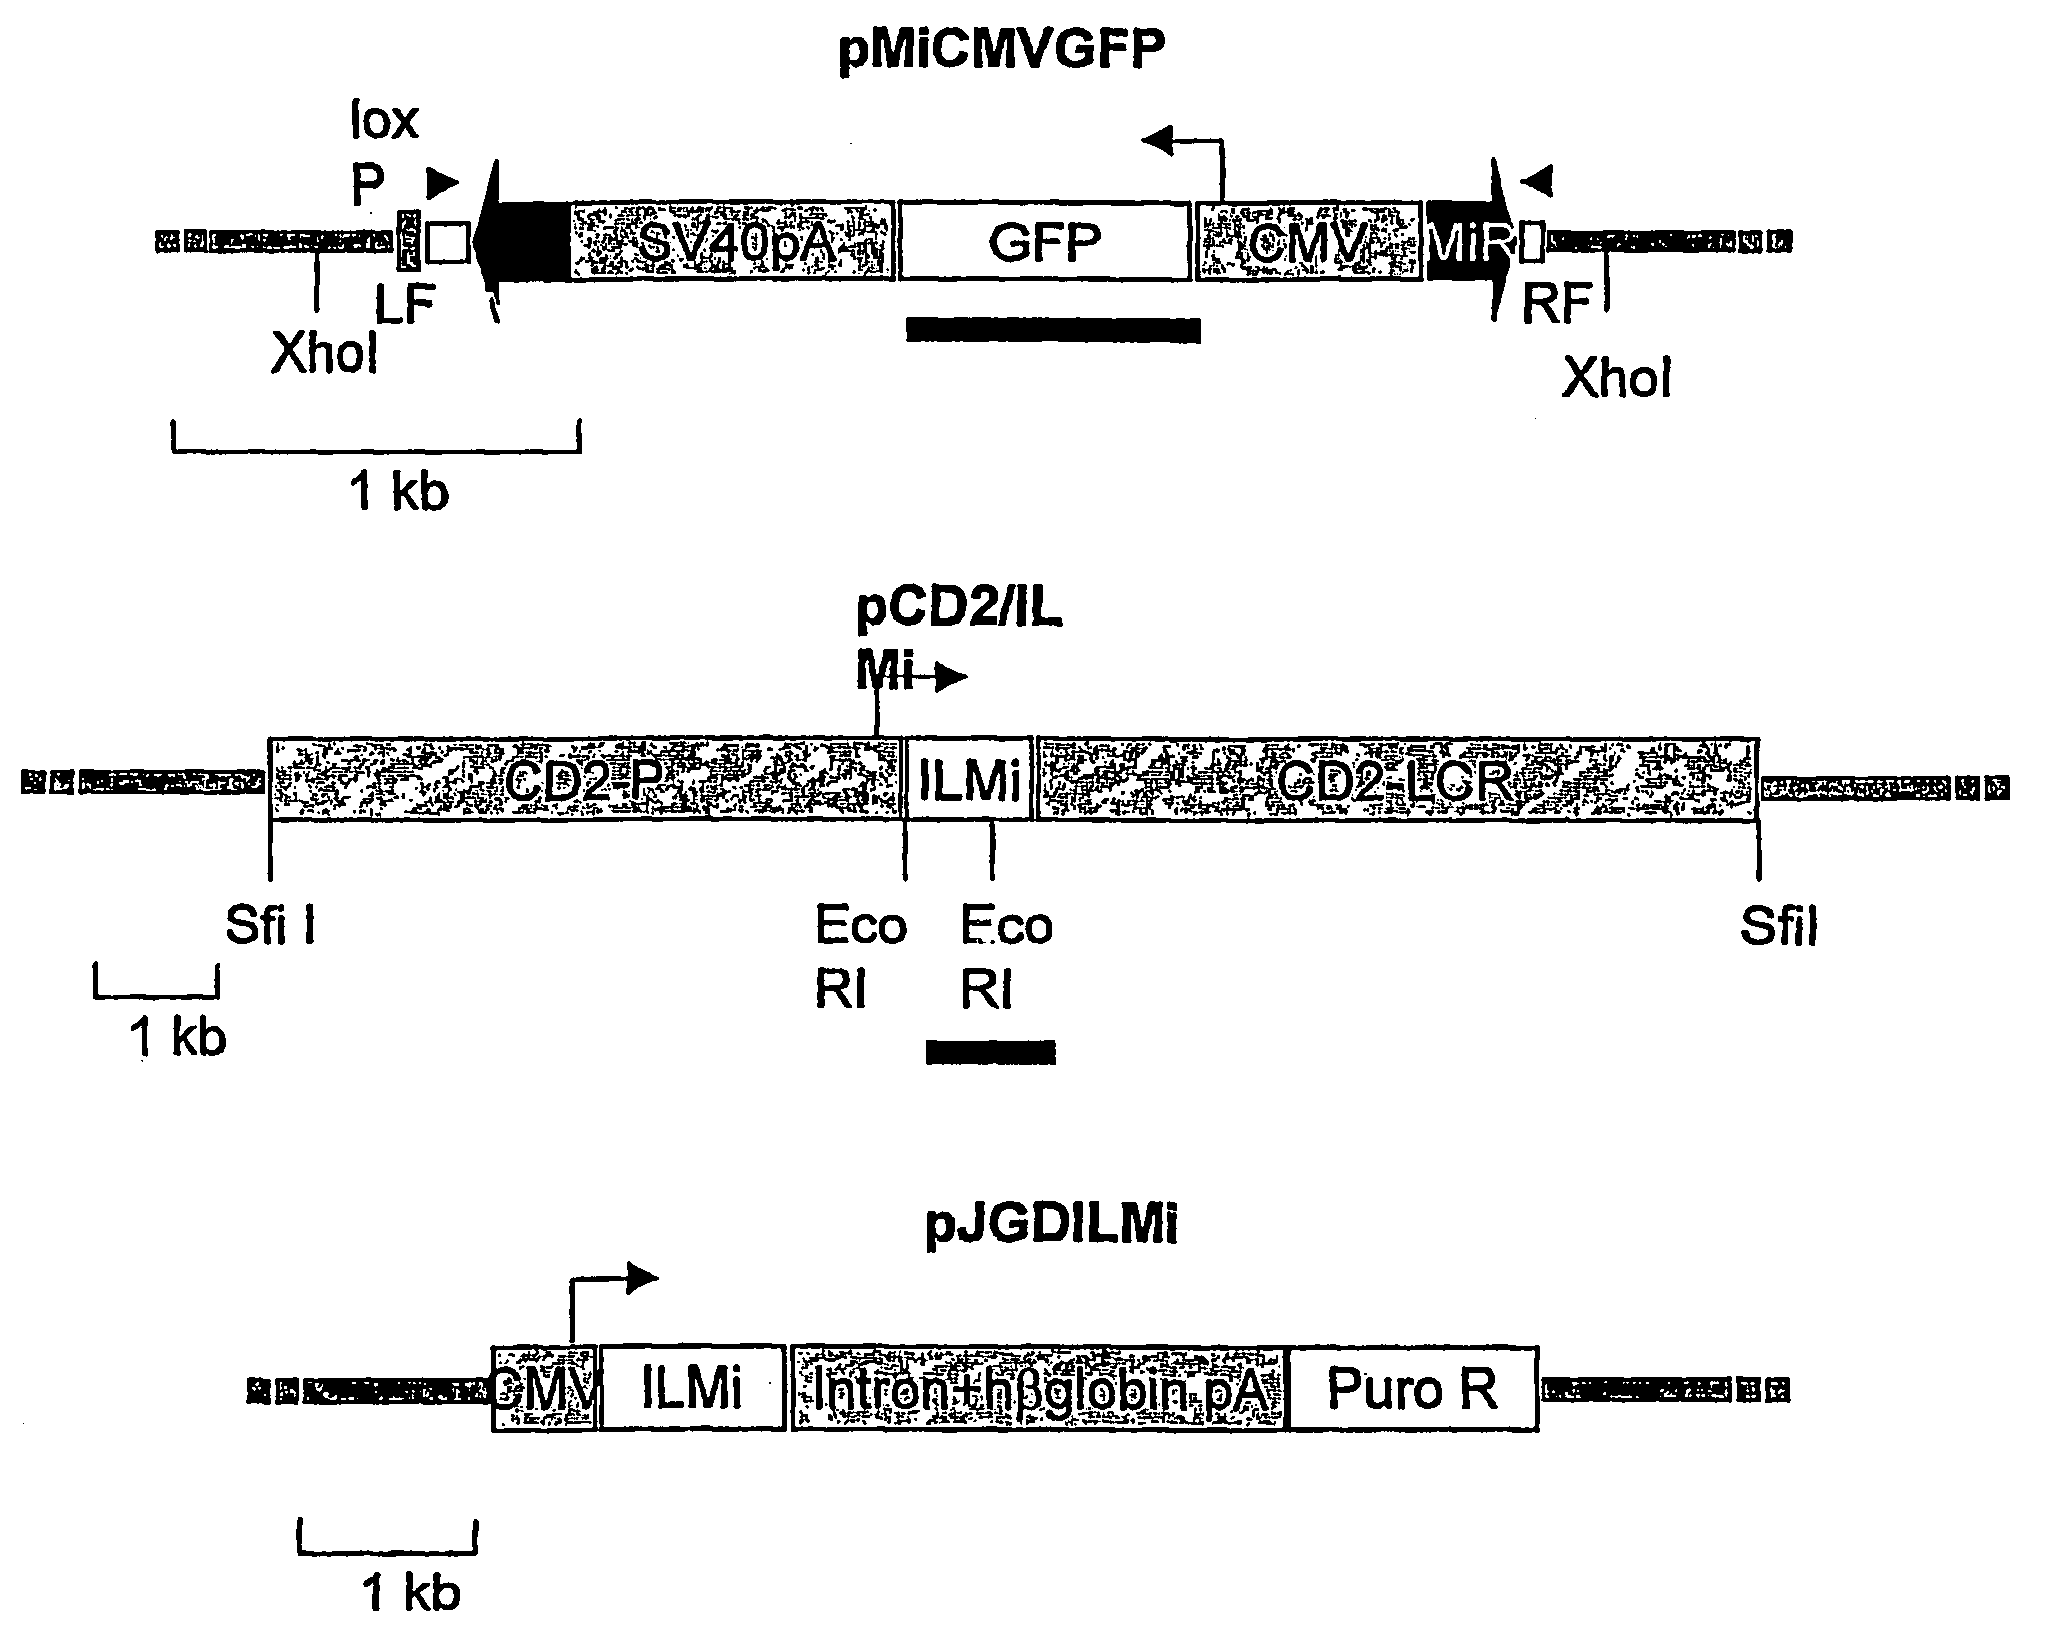 Method of generating transgenic organisms using transposons